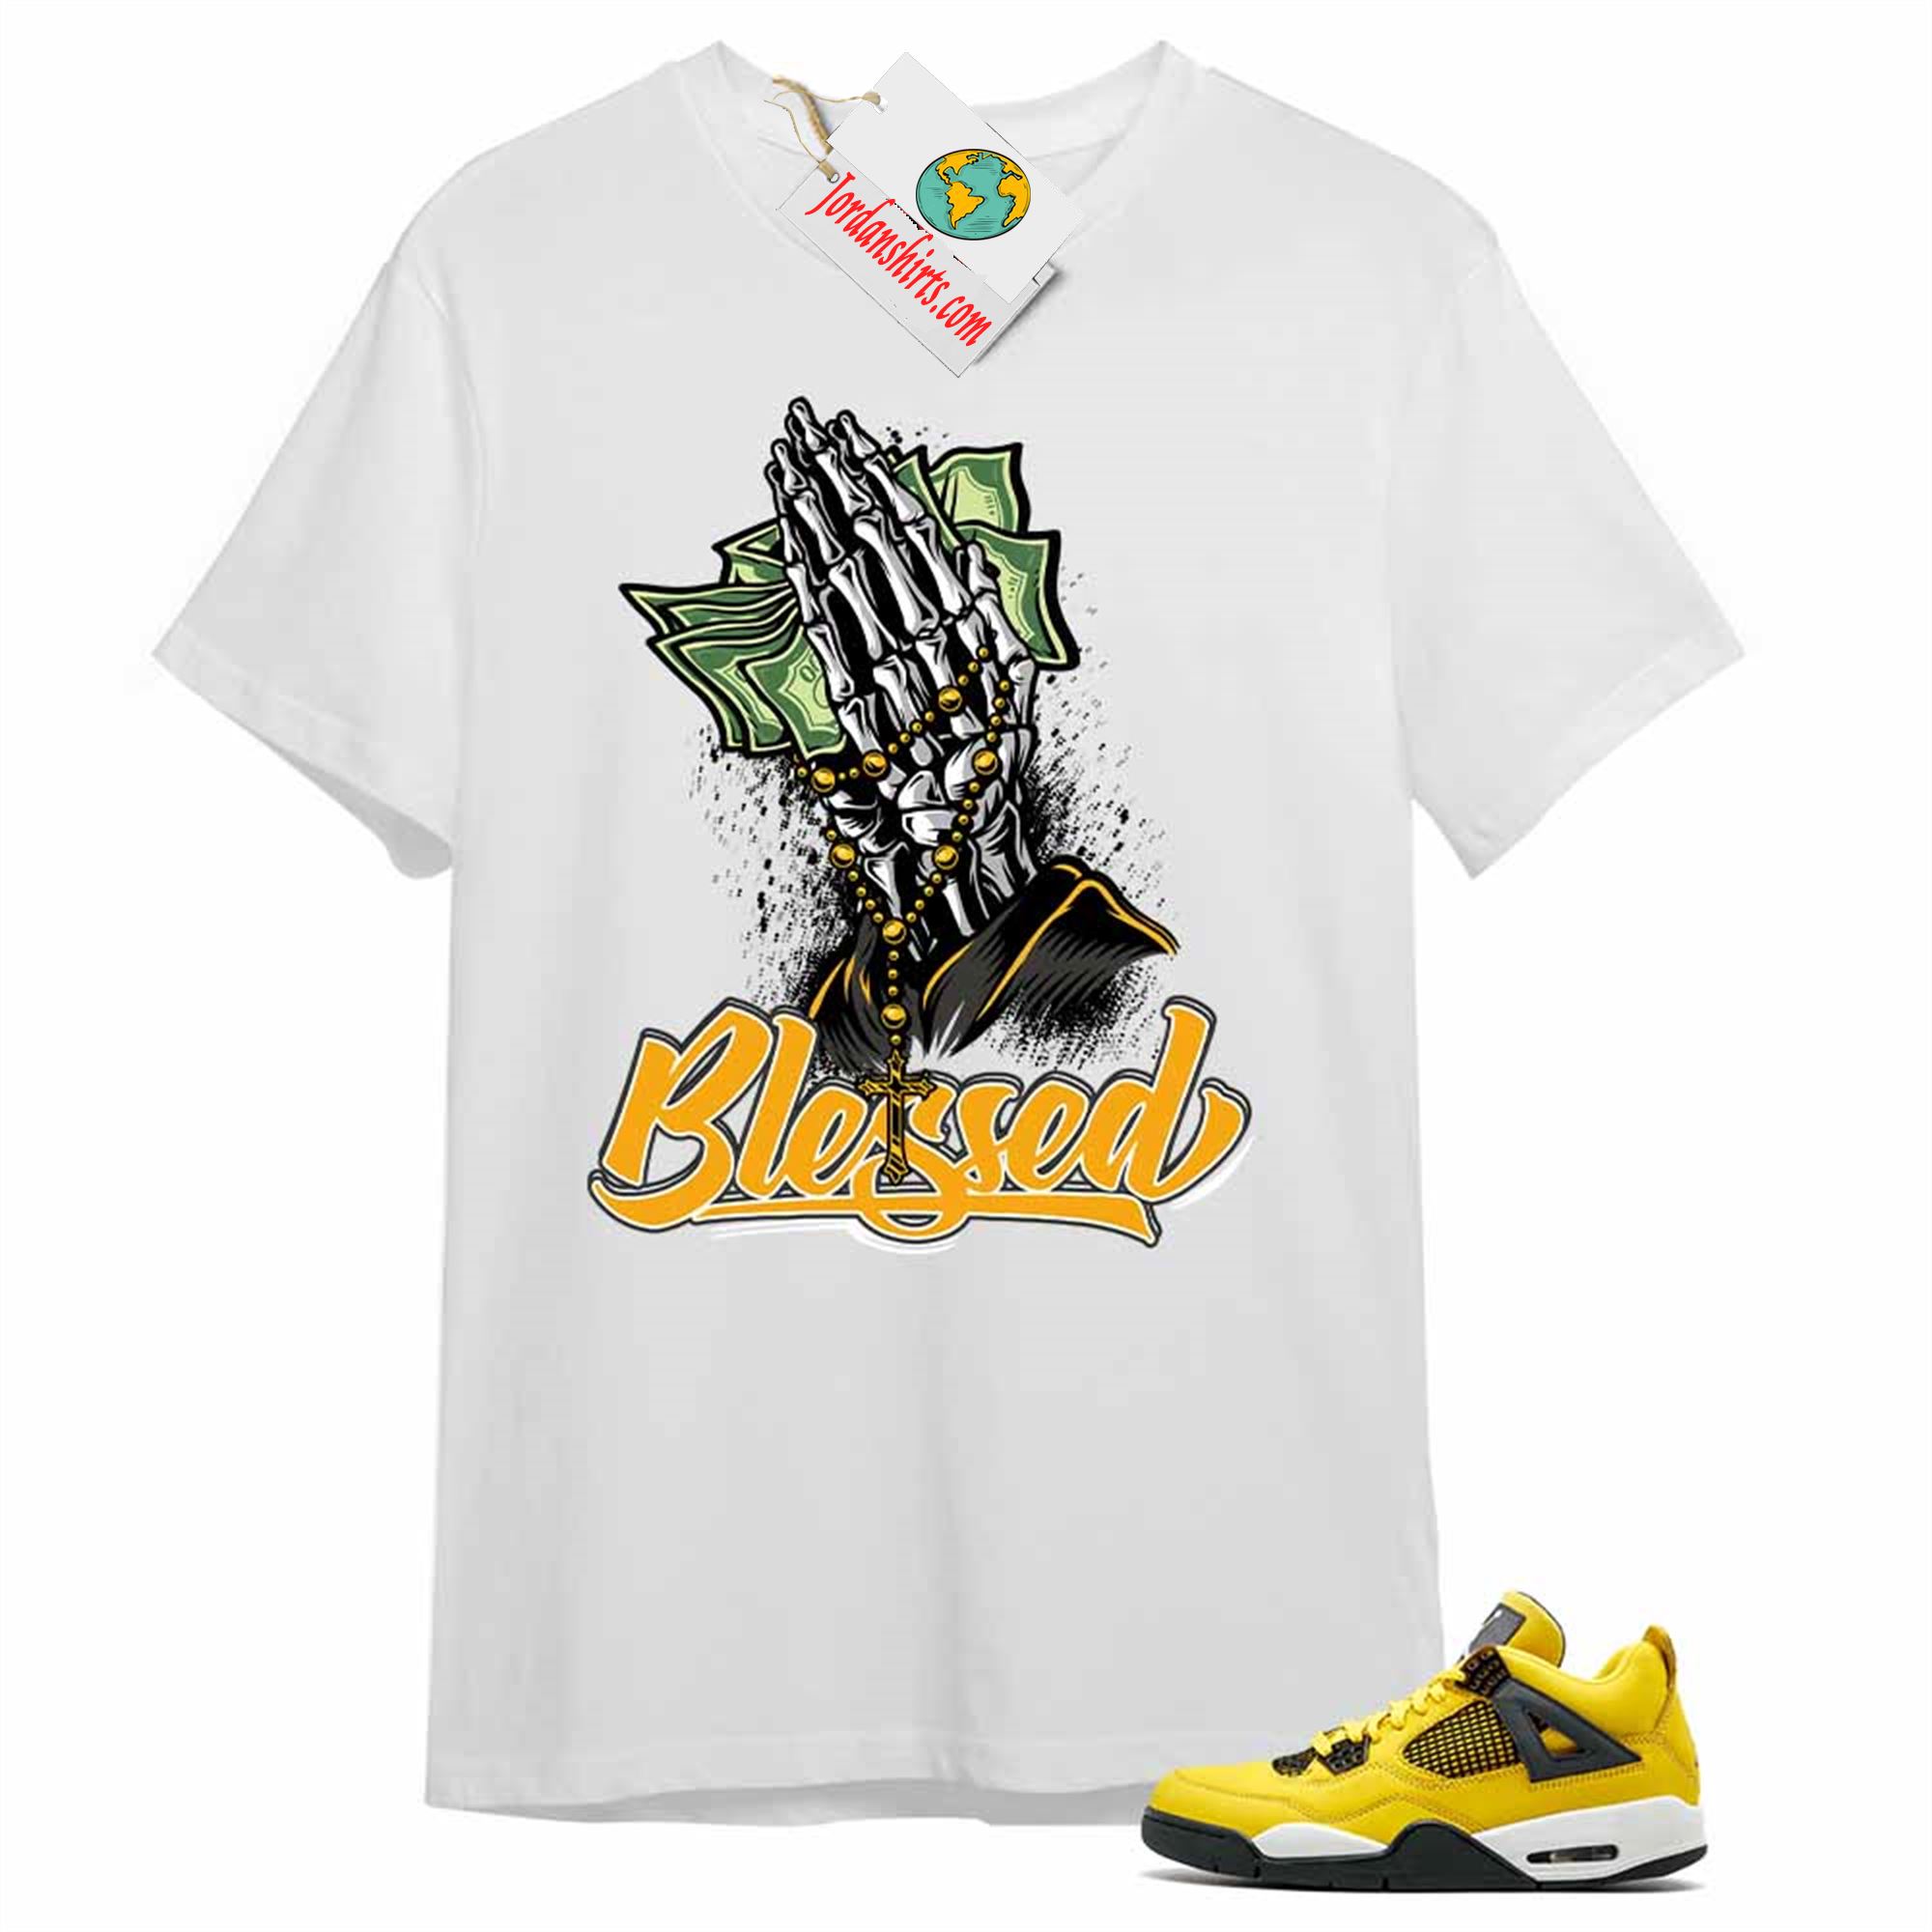 Jordan 4 Shirt, Blessed Pray Hand Money White Air Jordan 4 Tour Yellow Lightning 4s Size Up To 5xl